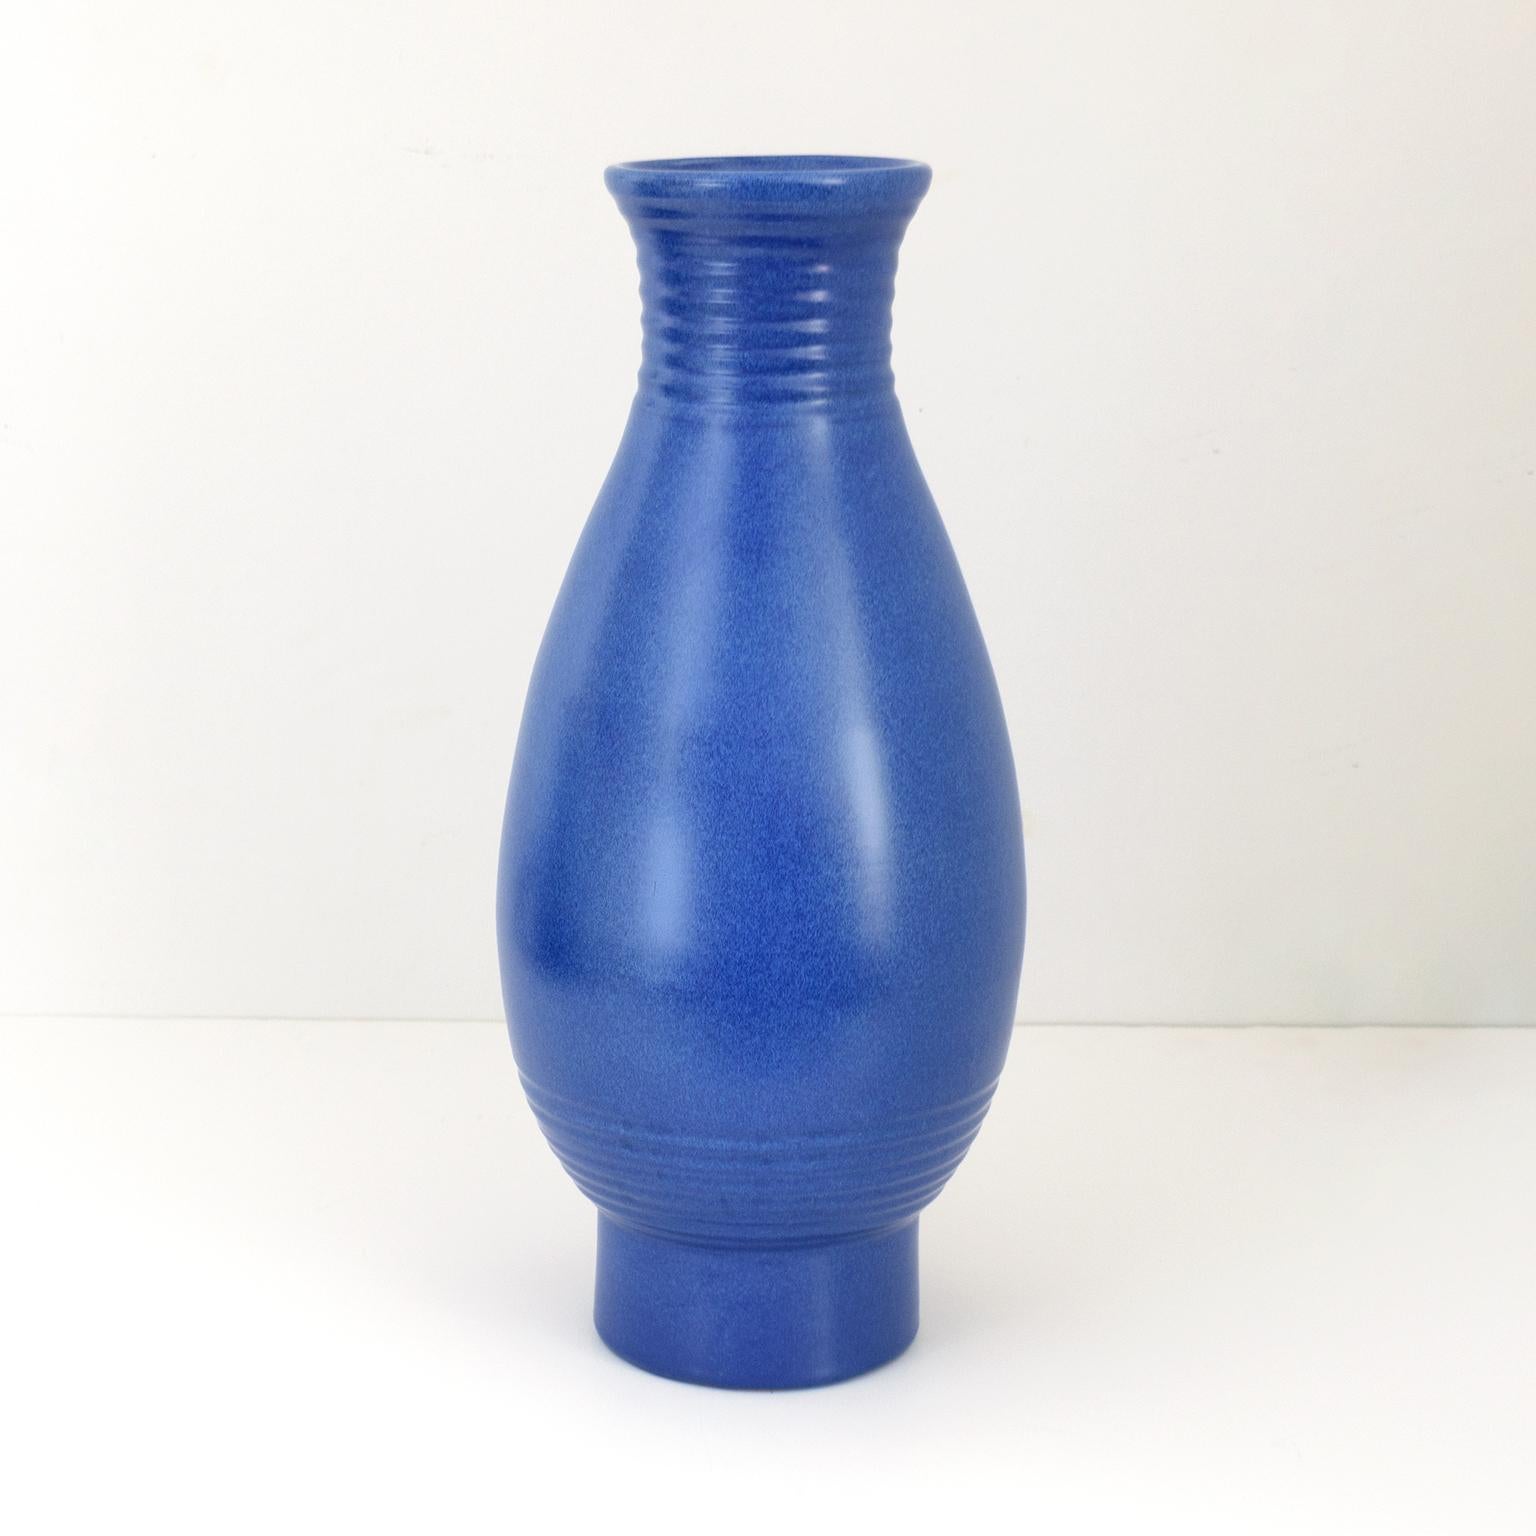 Swedish Art Deco vase by artist Ewald Dahlskog in a saturated blue glaze, produced at Bo Fajans.
Dimension range 19